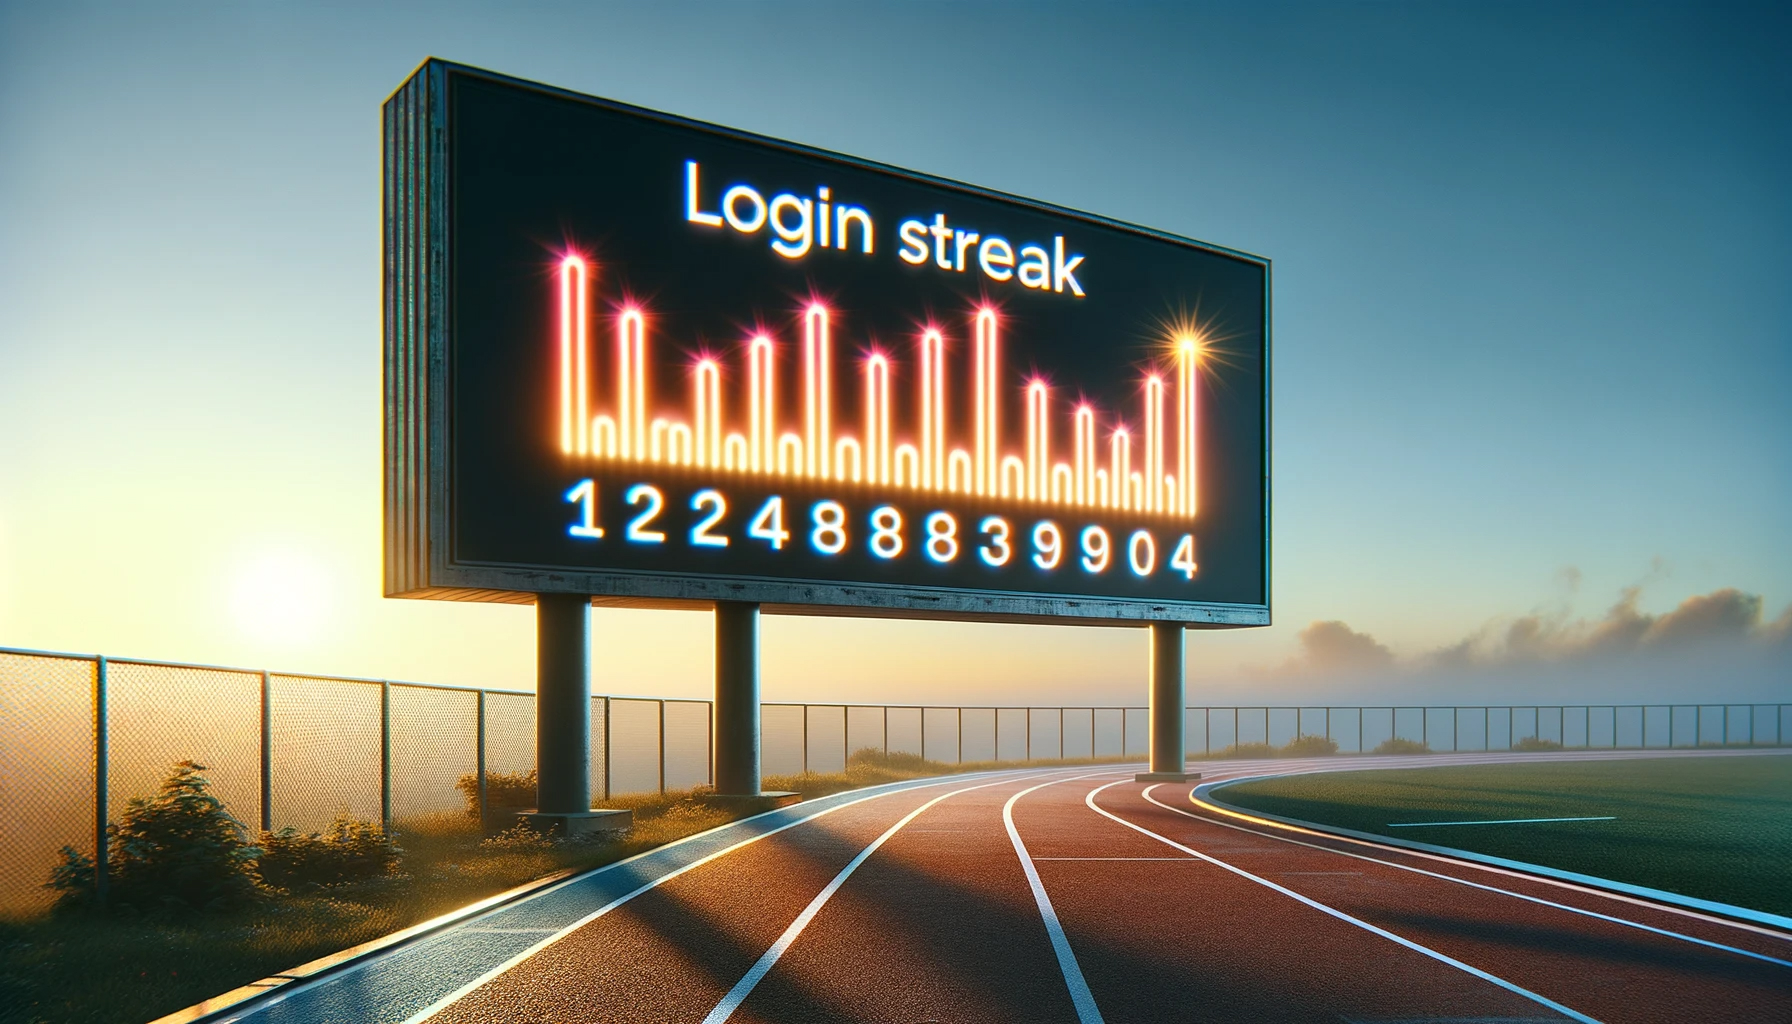 Login Streaks in Unyfy for improved user retention